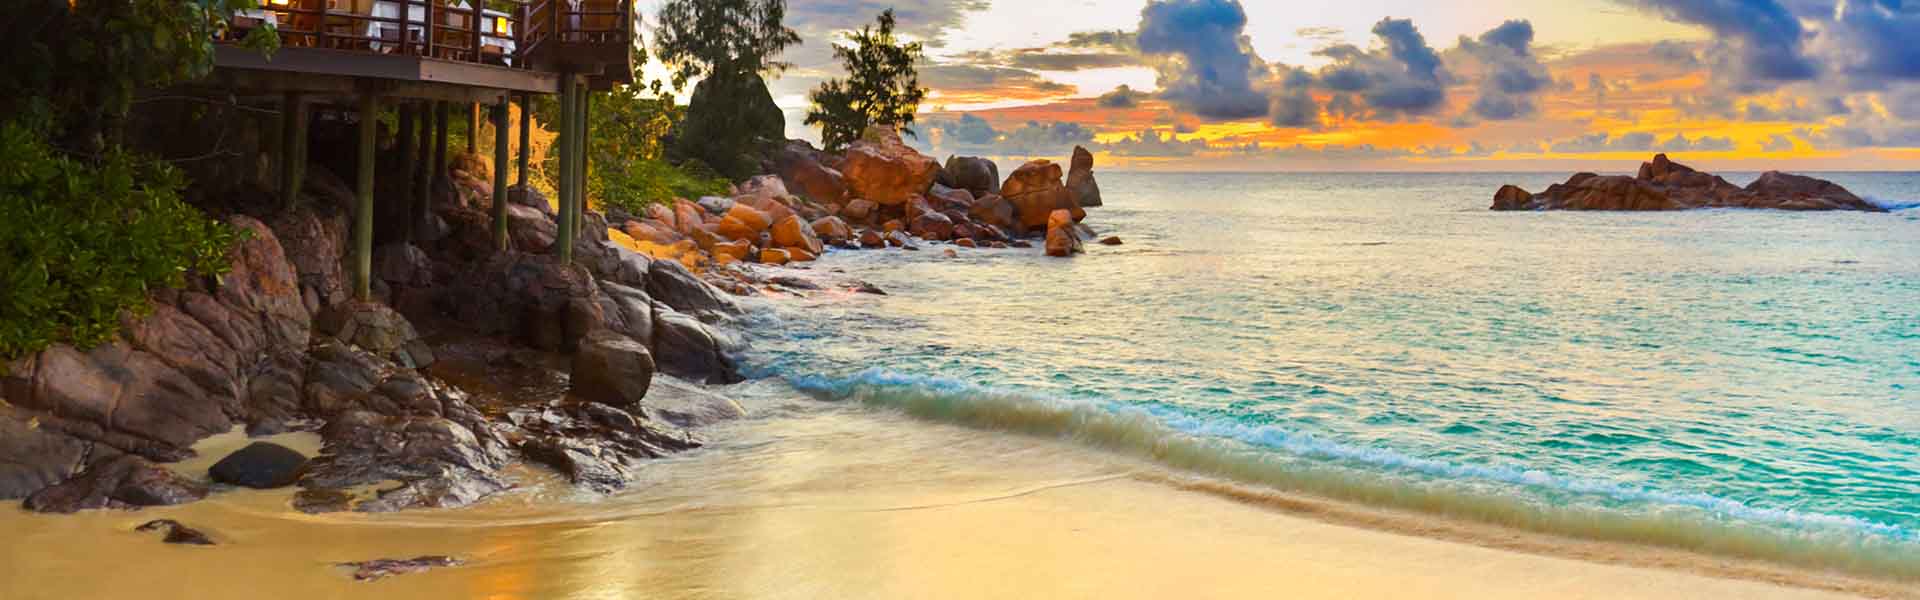 5 little-known Caribbean islands